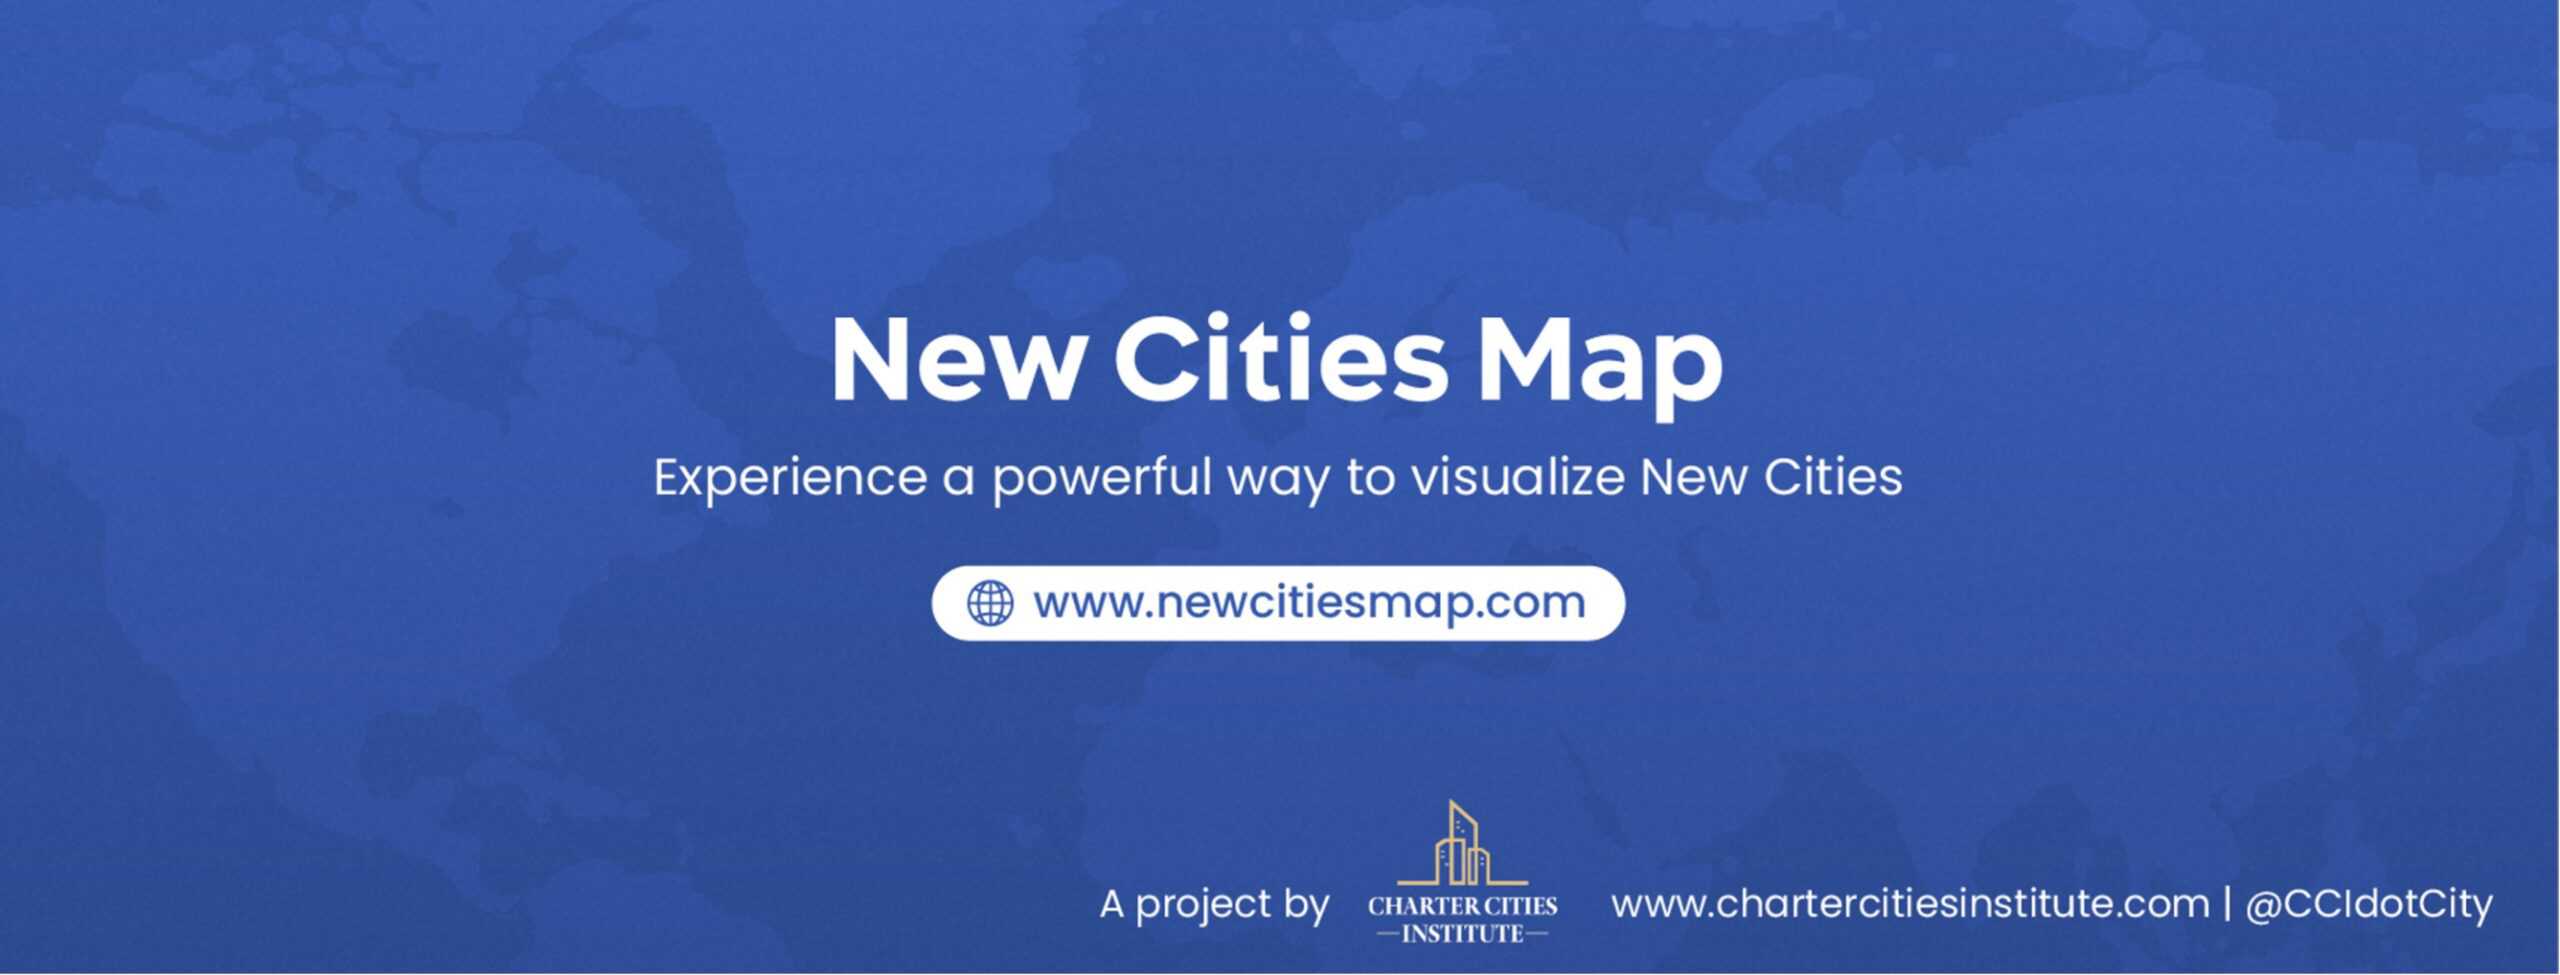 New Cities Map blog banner